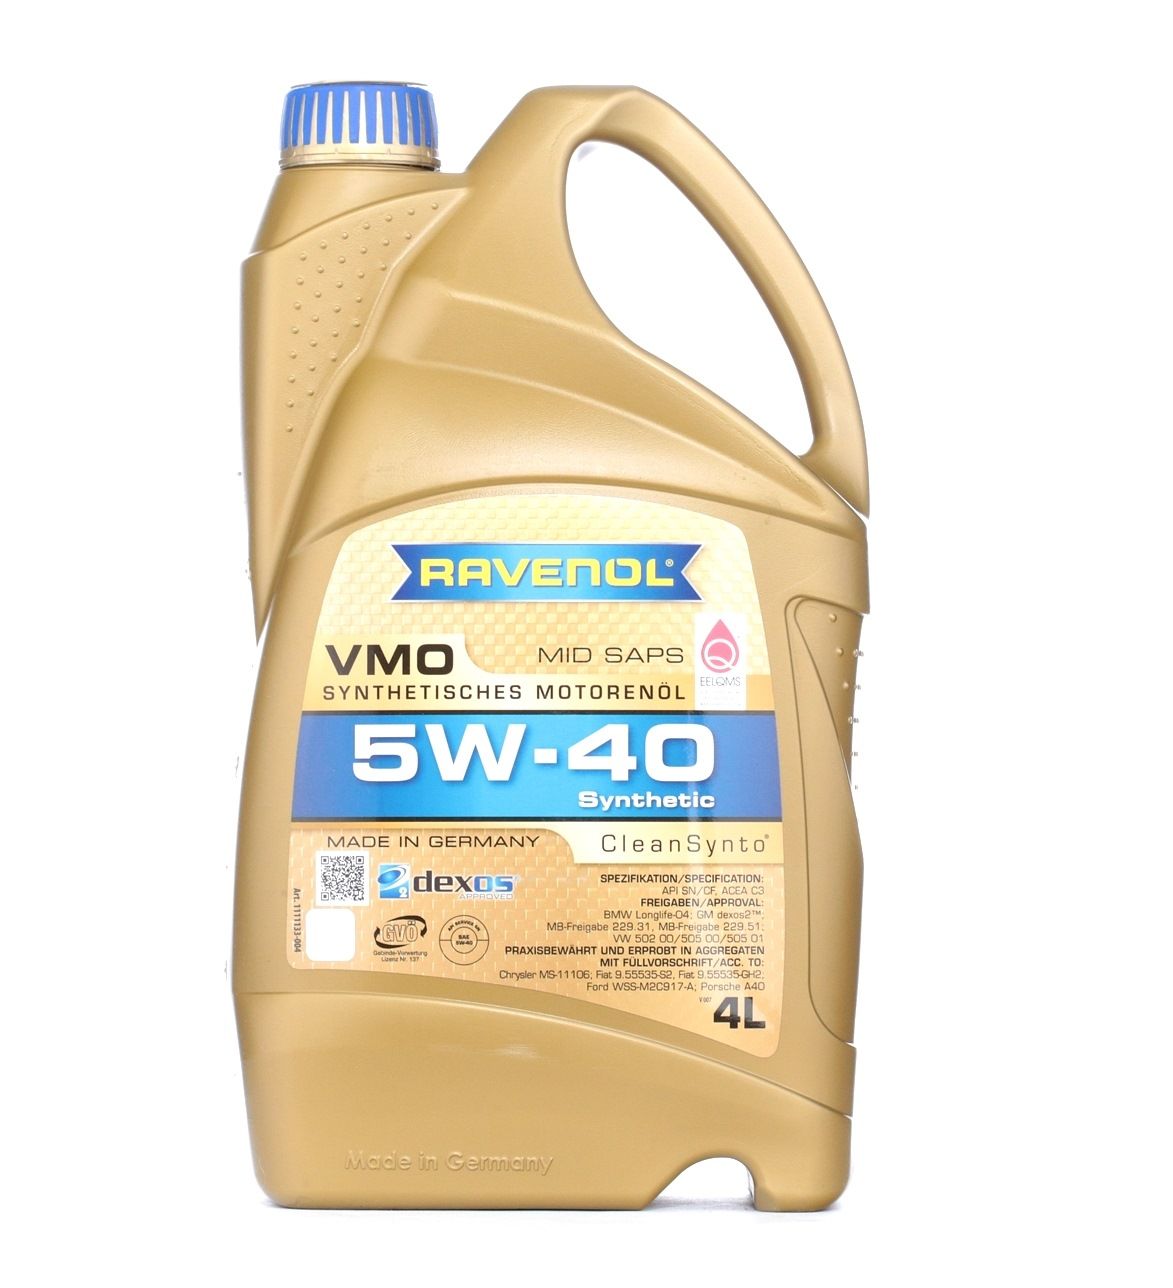 RAVENOL VMO 5W-40, 4l, Synthetic Oil Motor oil 1111133-004-01-999 buy